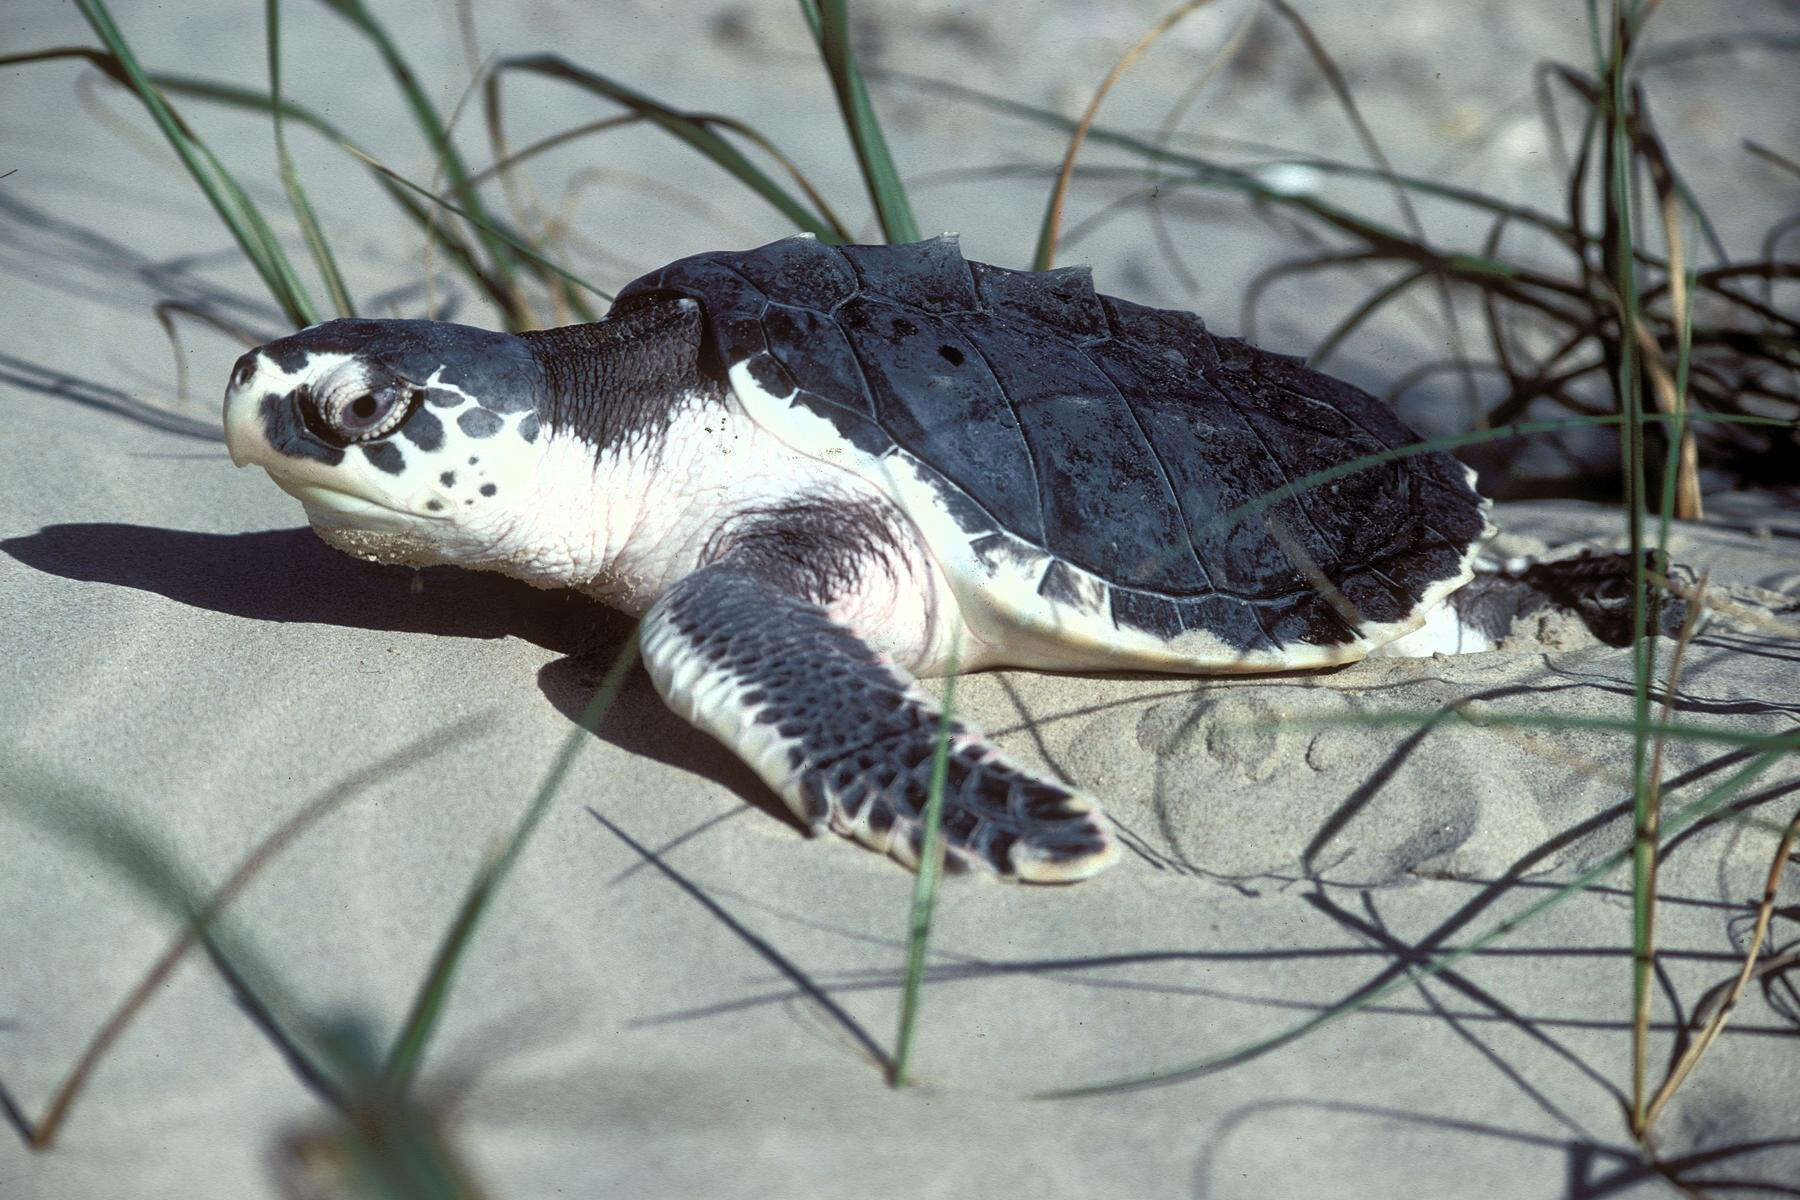 sea turtle litter death